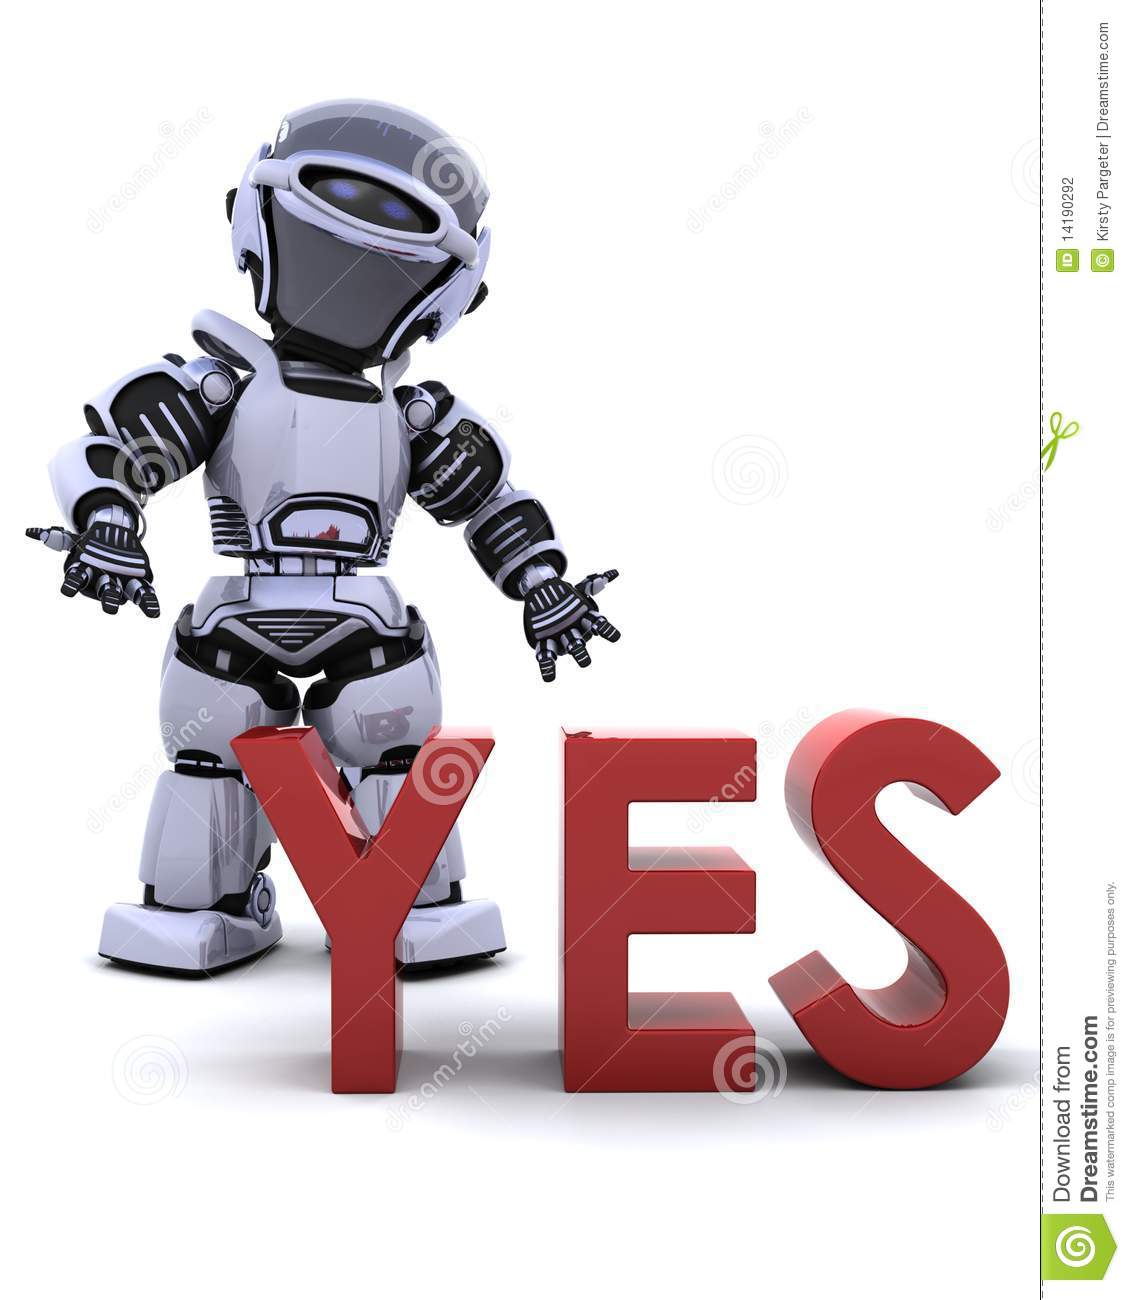 robot-yes-sign-14190292.jpg